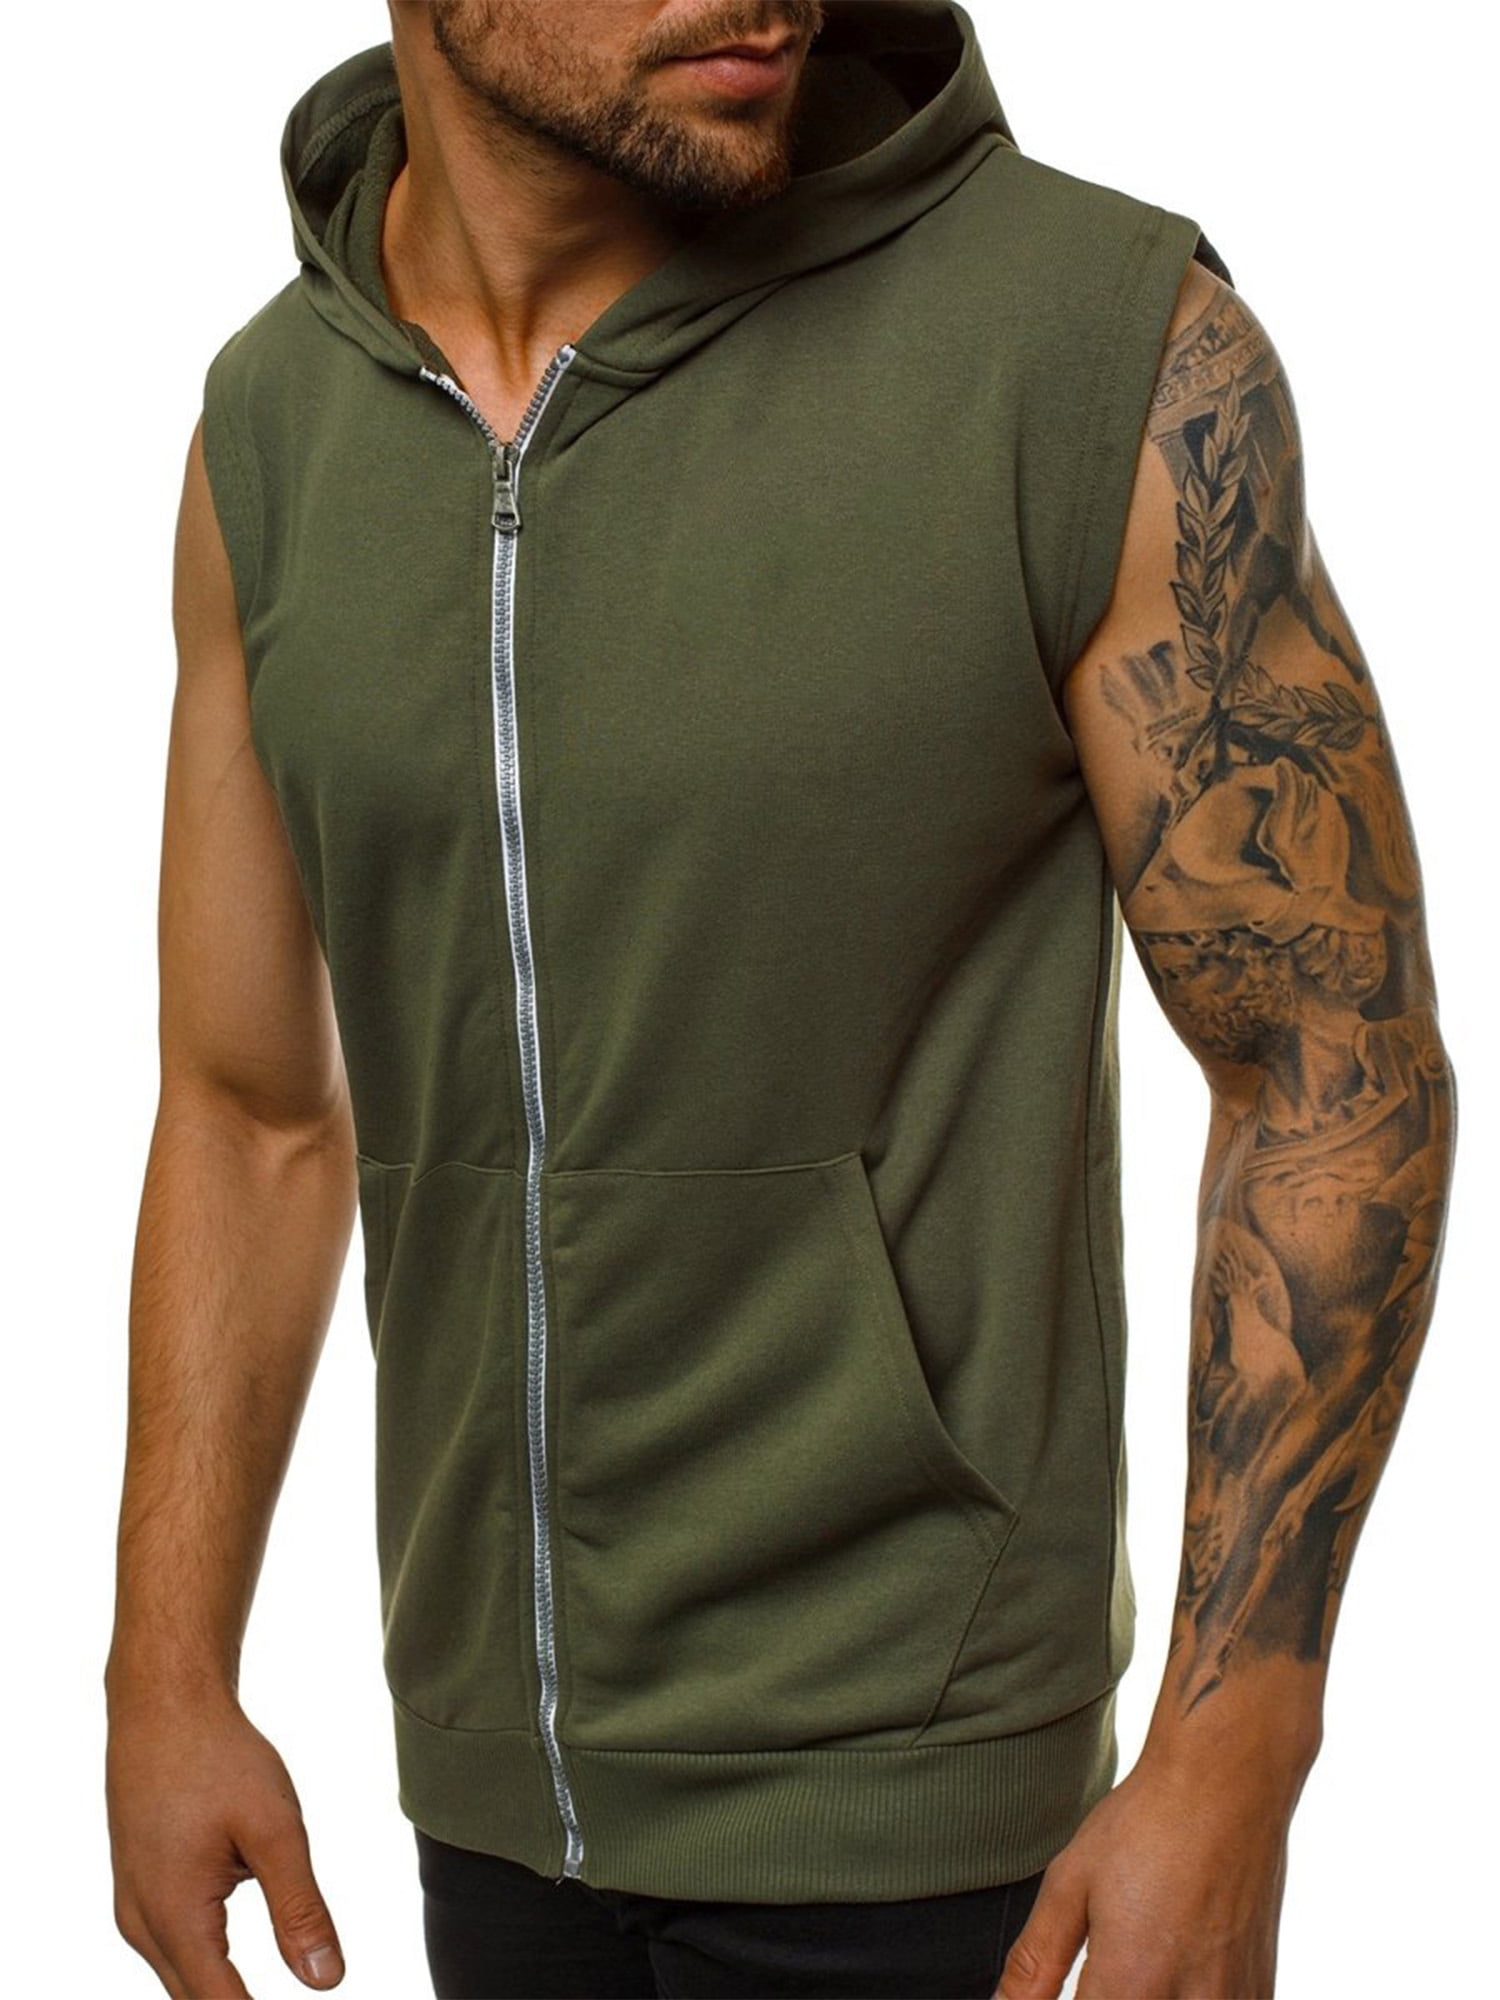 Fieer Mens Army Workout Casual Baggy Zipper Jacket Sweatshirt